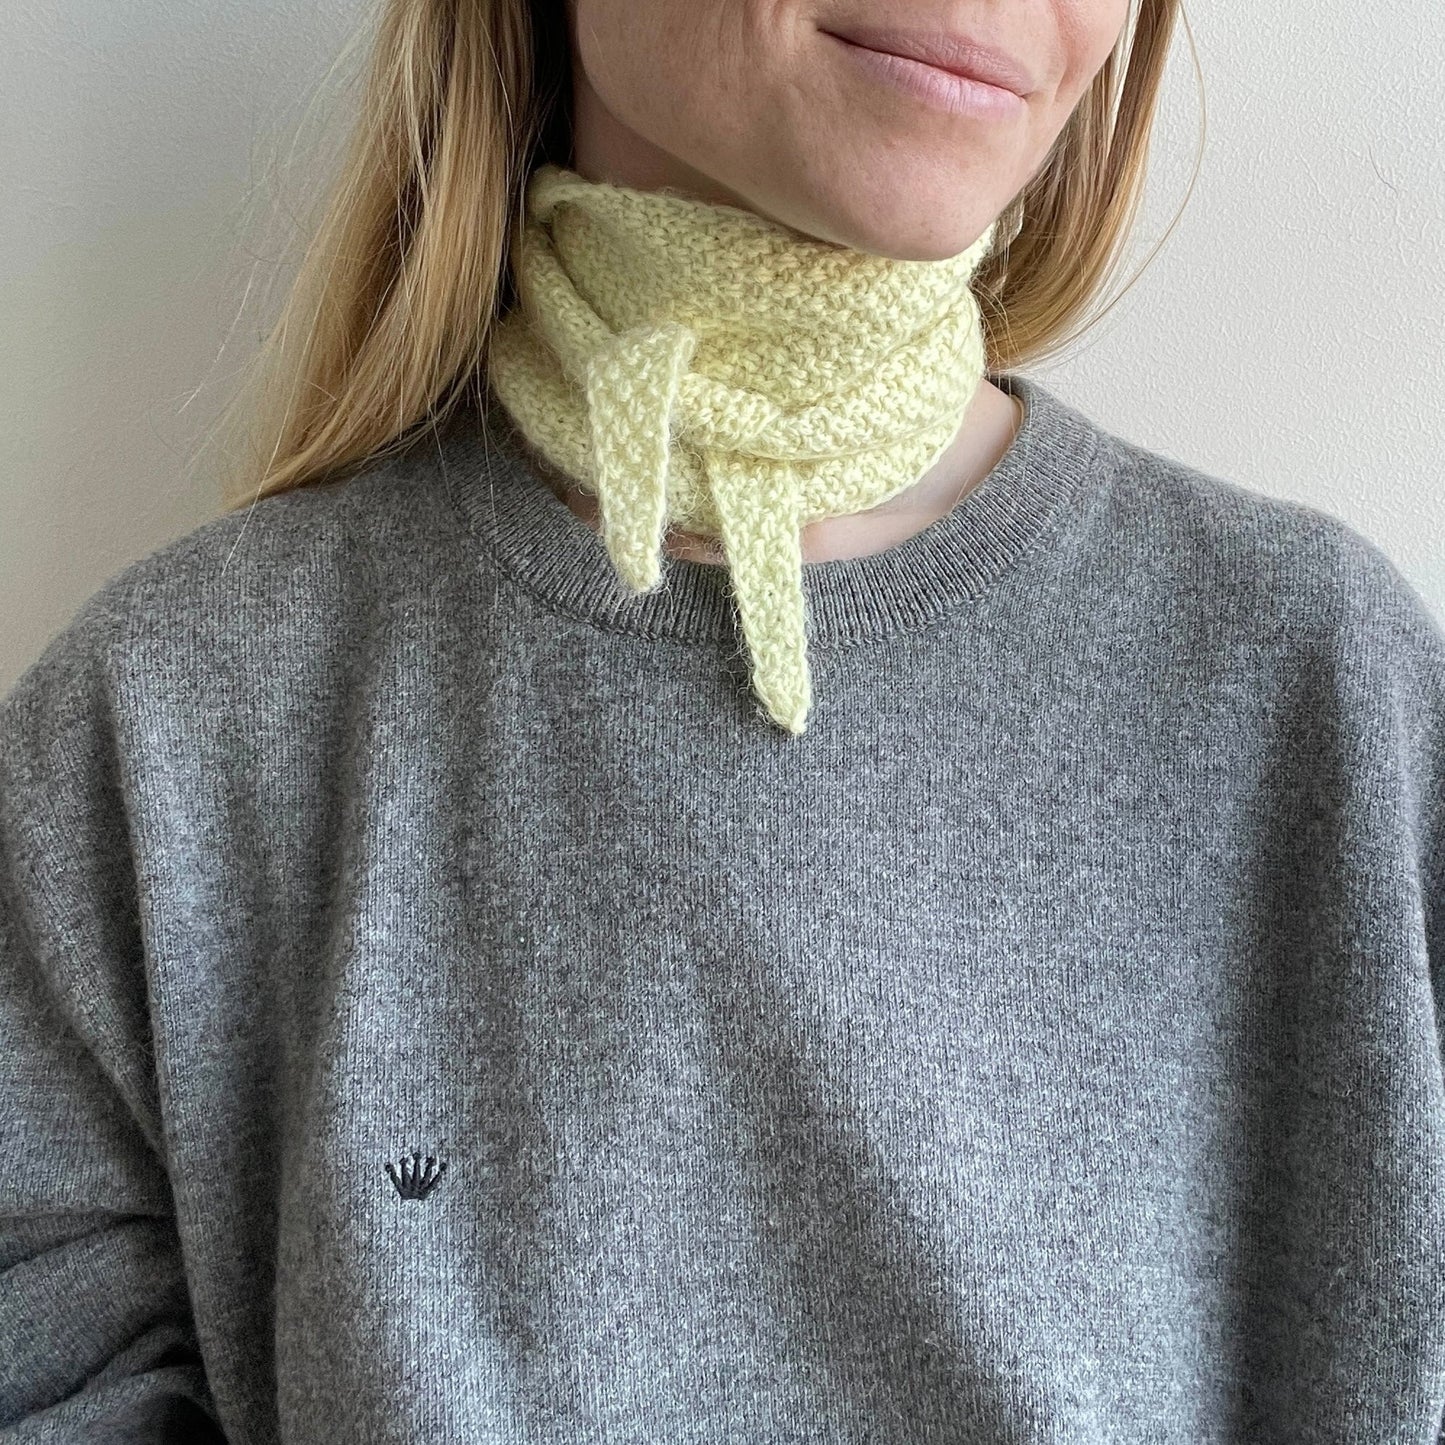 Pastel scarf knitting pattern from Pastelkollektivet Bandana